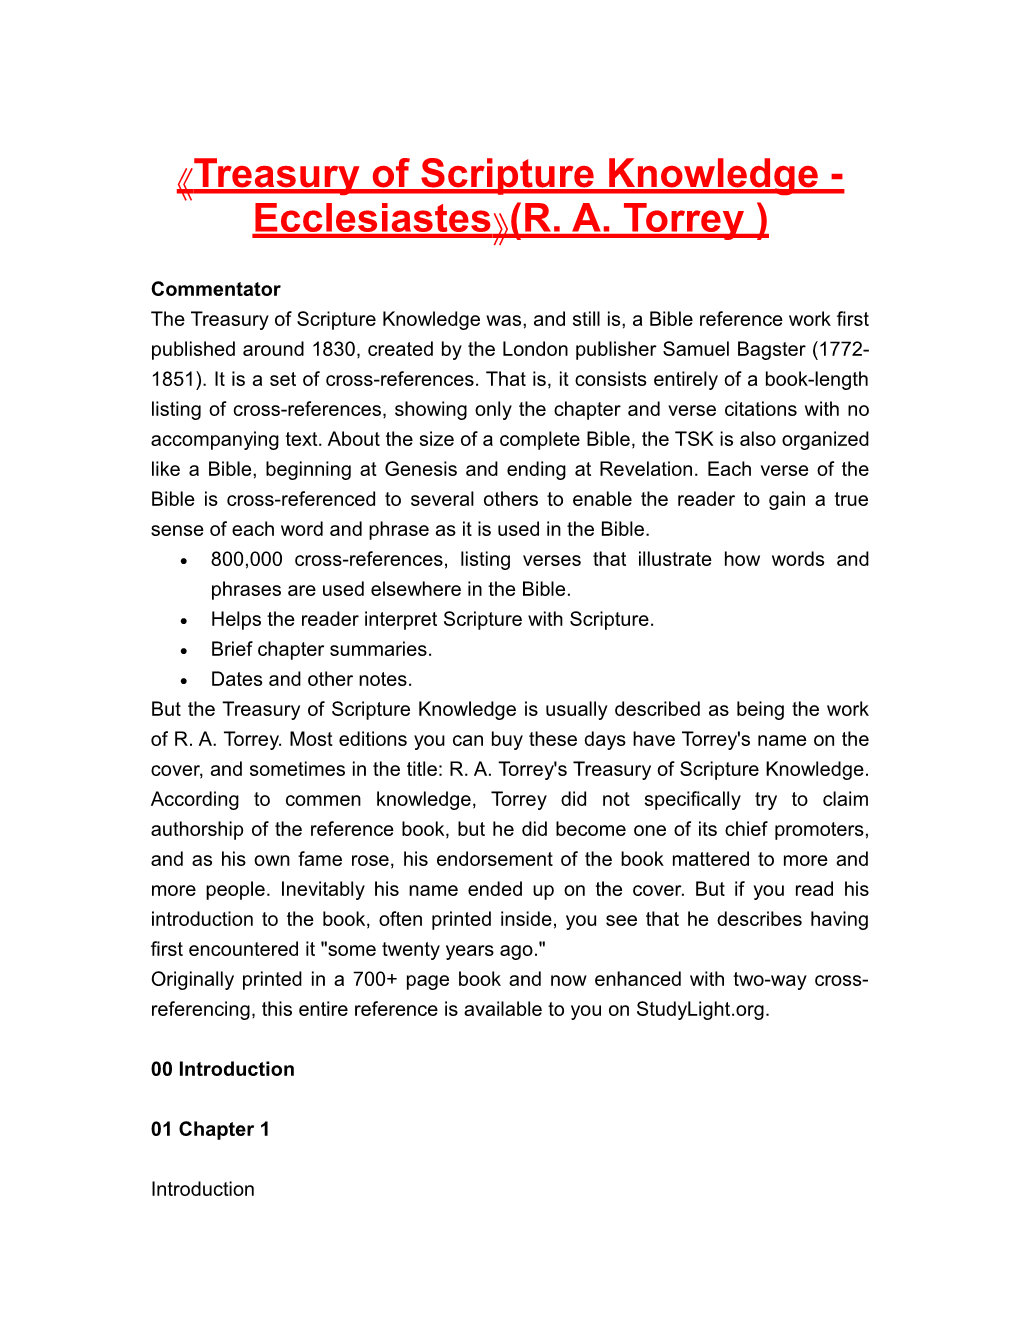 Treasuryofscriptureknowledge - Ecclesiastes (R. A.Torrey)